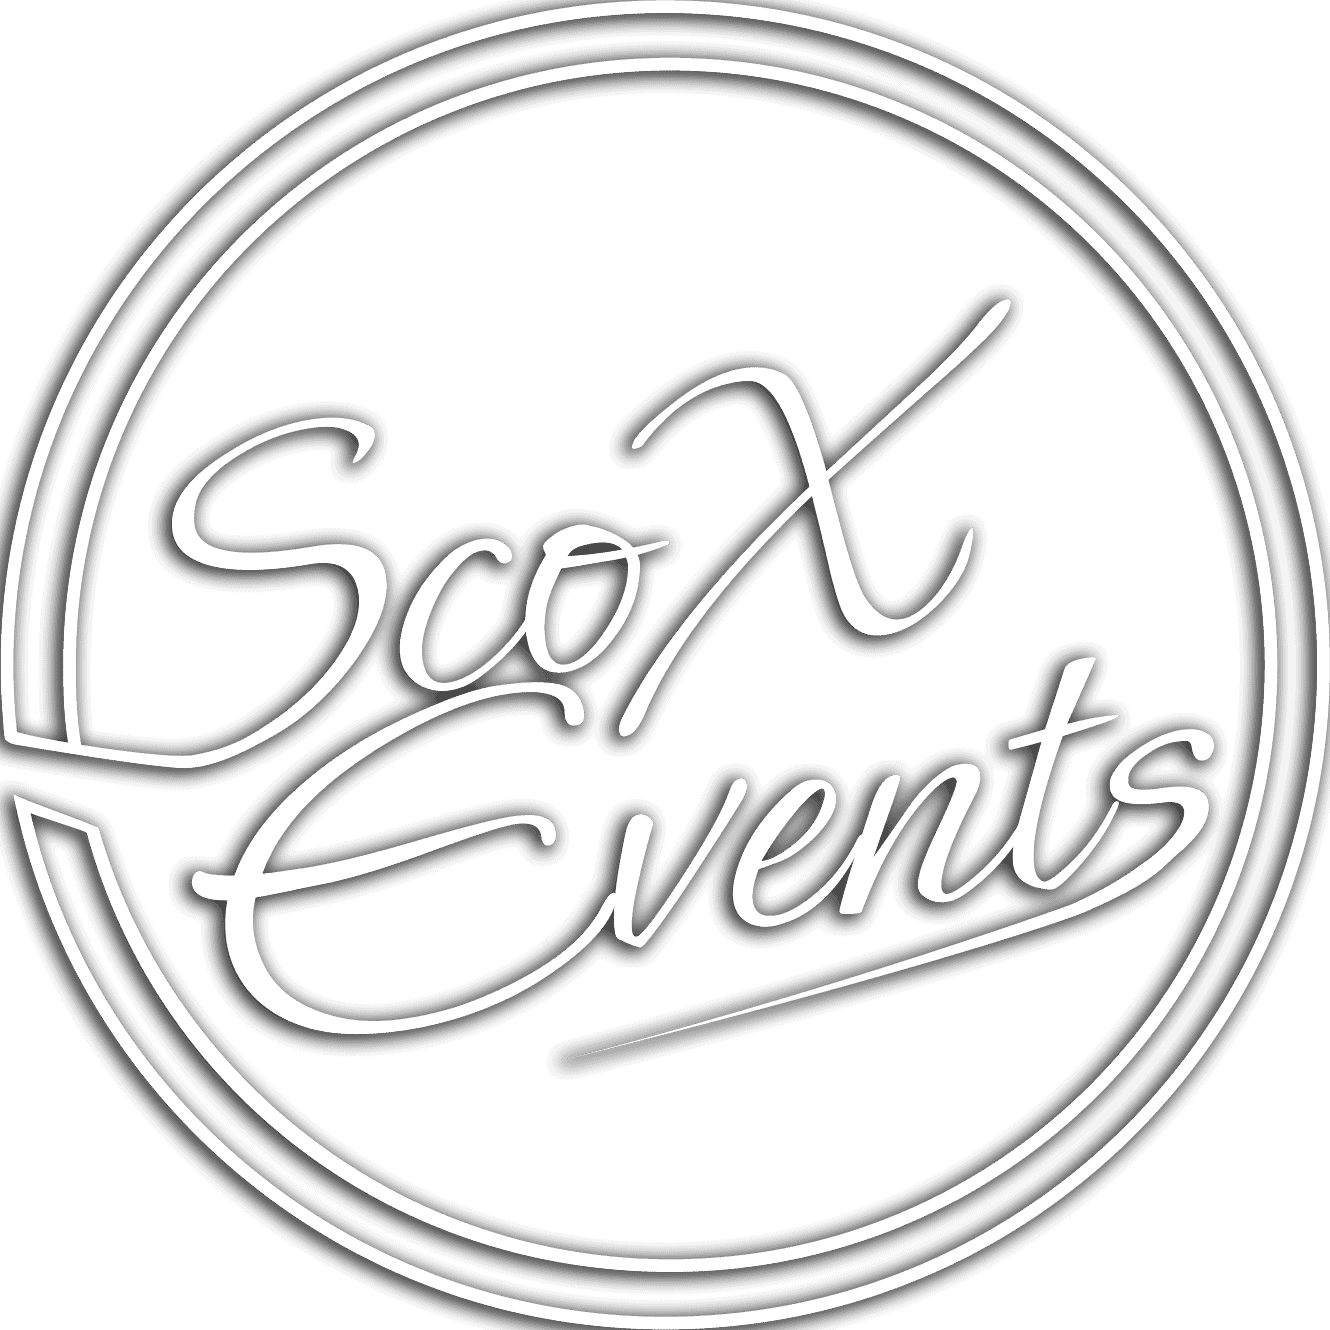 Scox Events